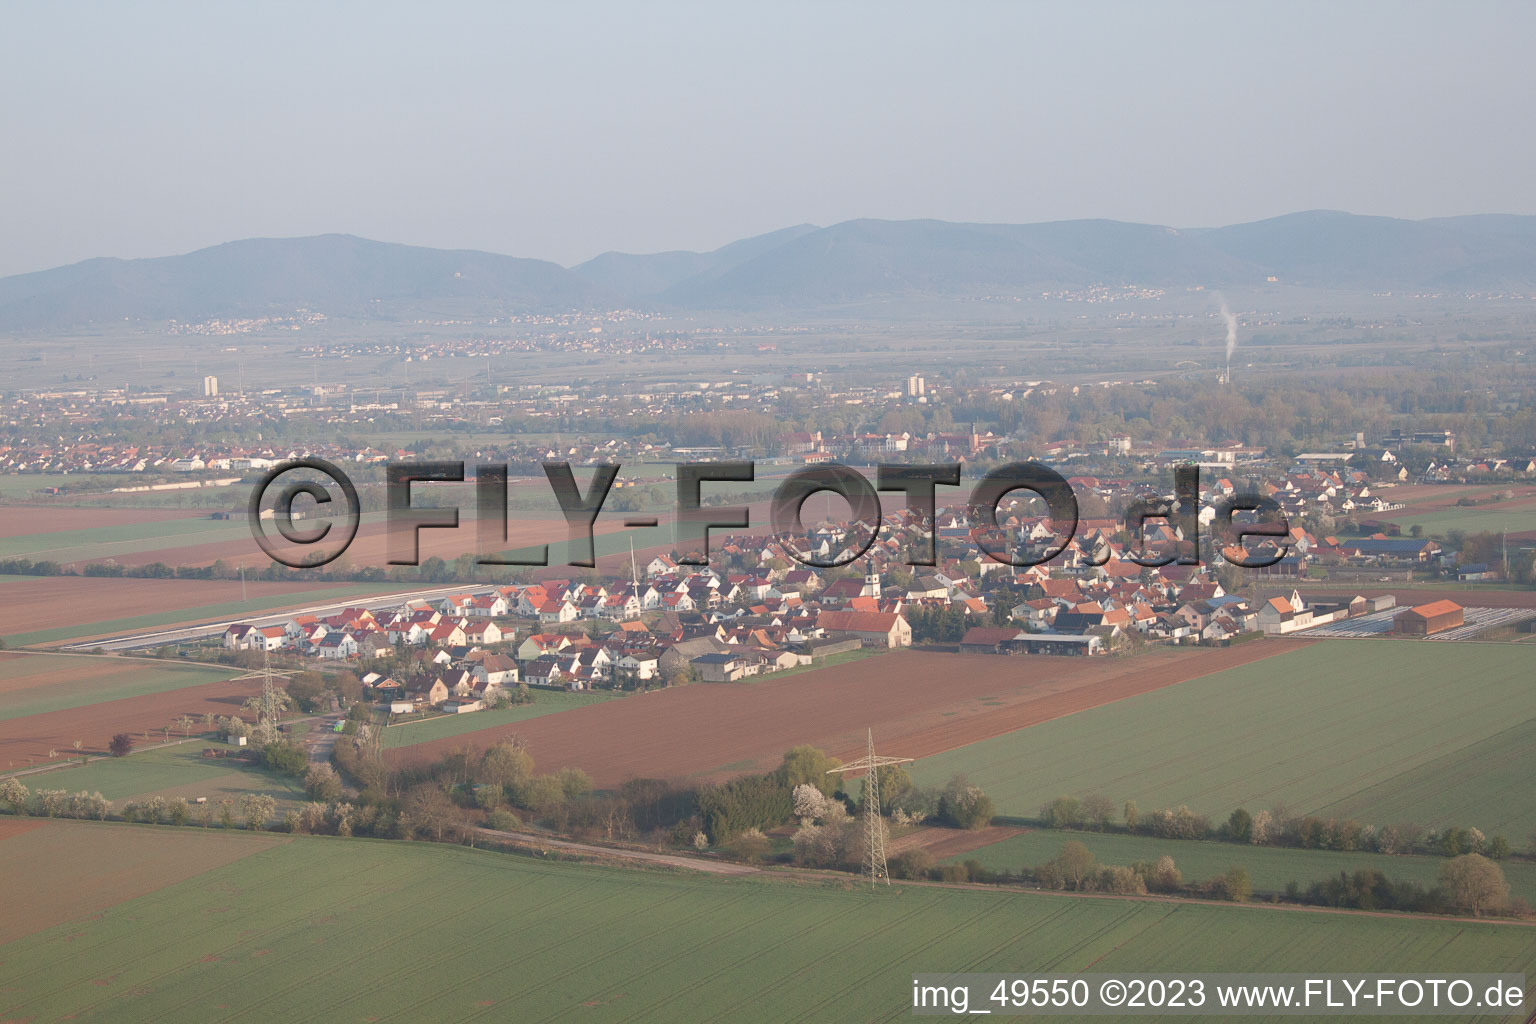 District Mörlheim in Landau in der Pfalz in the state Rhineland-Palatinate, Germany from a drone